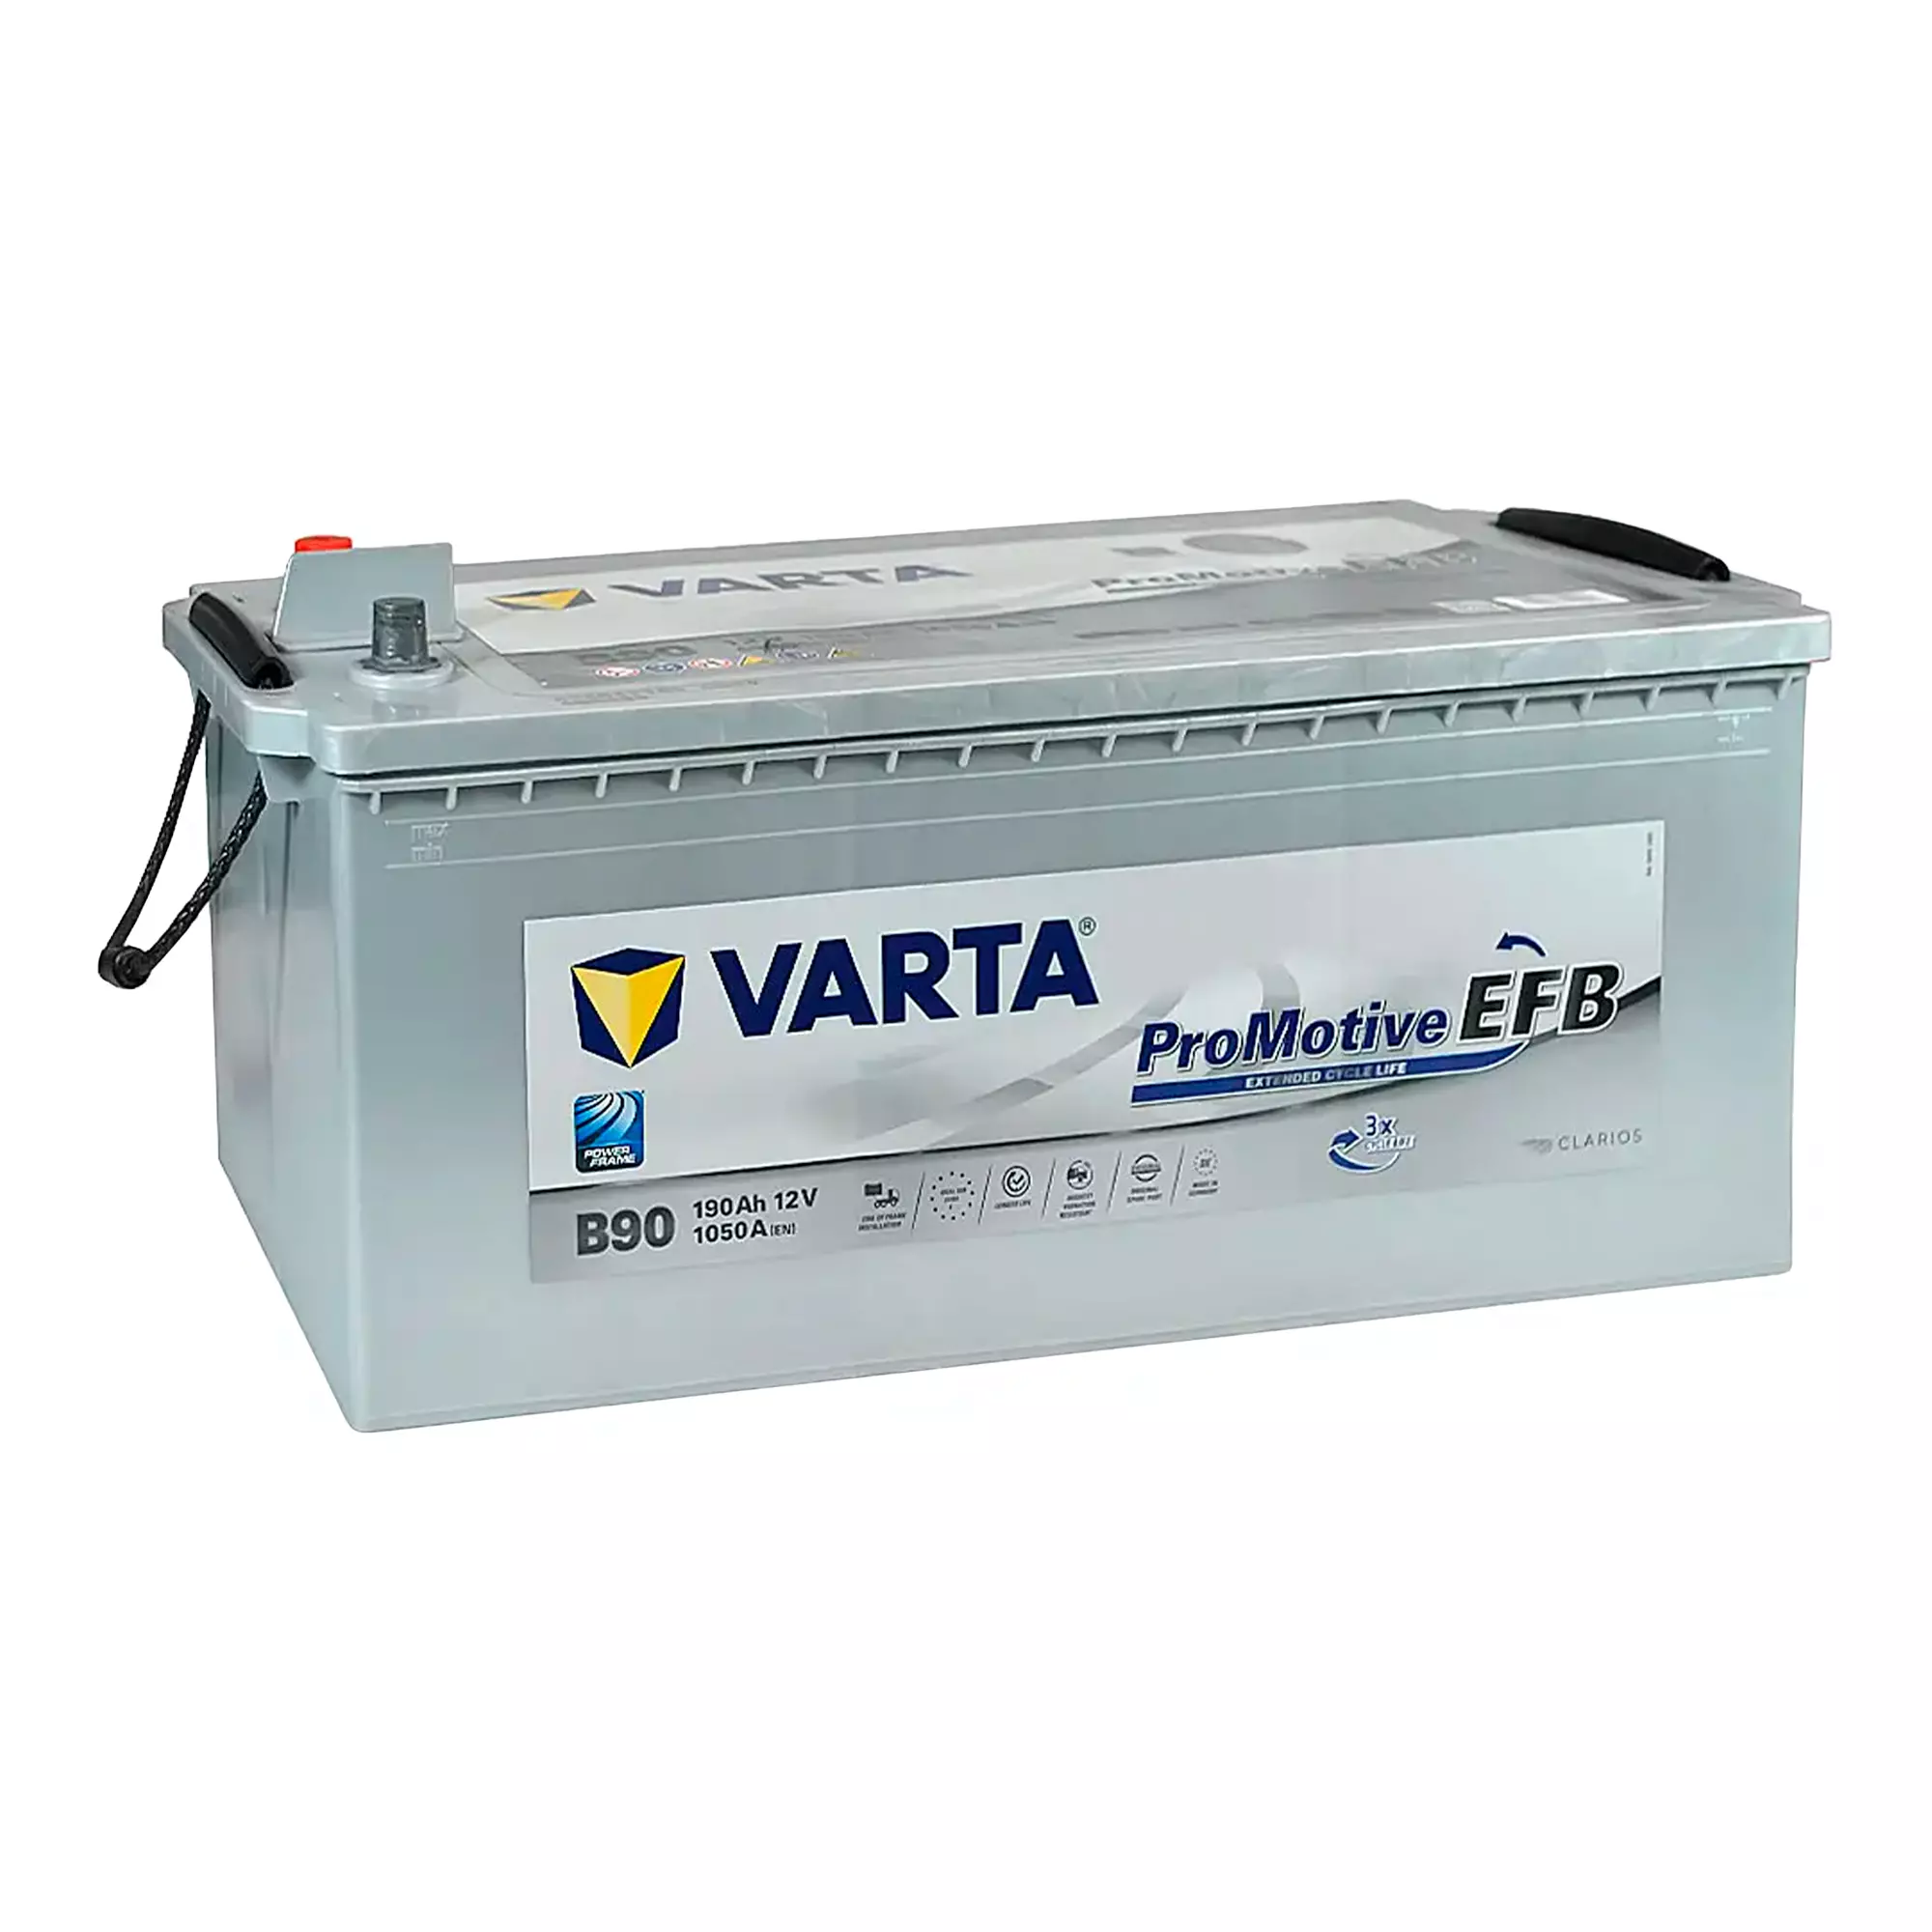 Грузовой аккумулятор Varta Promotive EFB 6СТ-190Ah 1050A Аз (PM690500105)